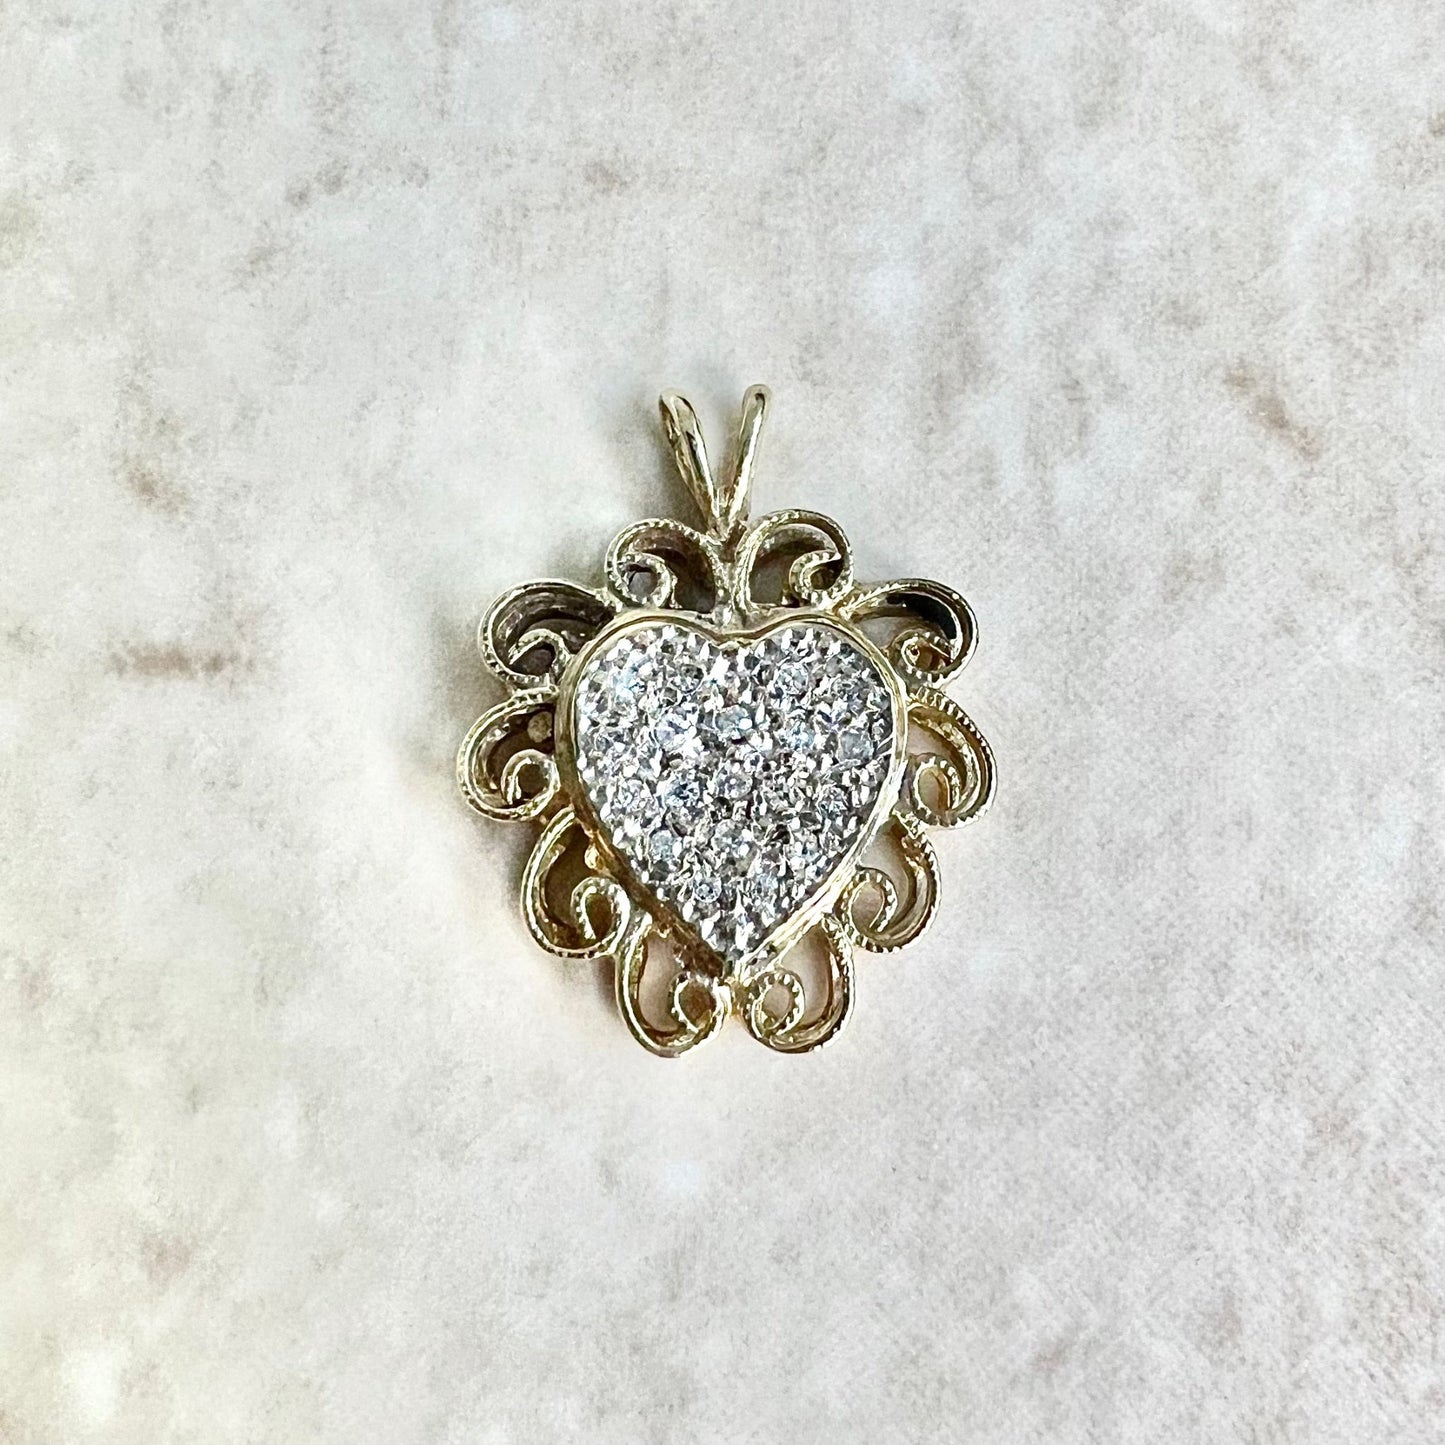 CLEARANCE 40% OFF - Vintage 14 Karat Two Tone Gold Diamond Cluster Heart Pendant